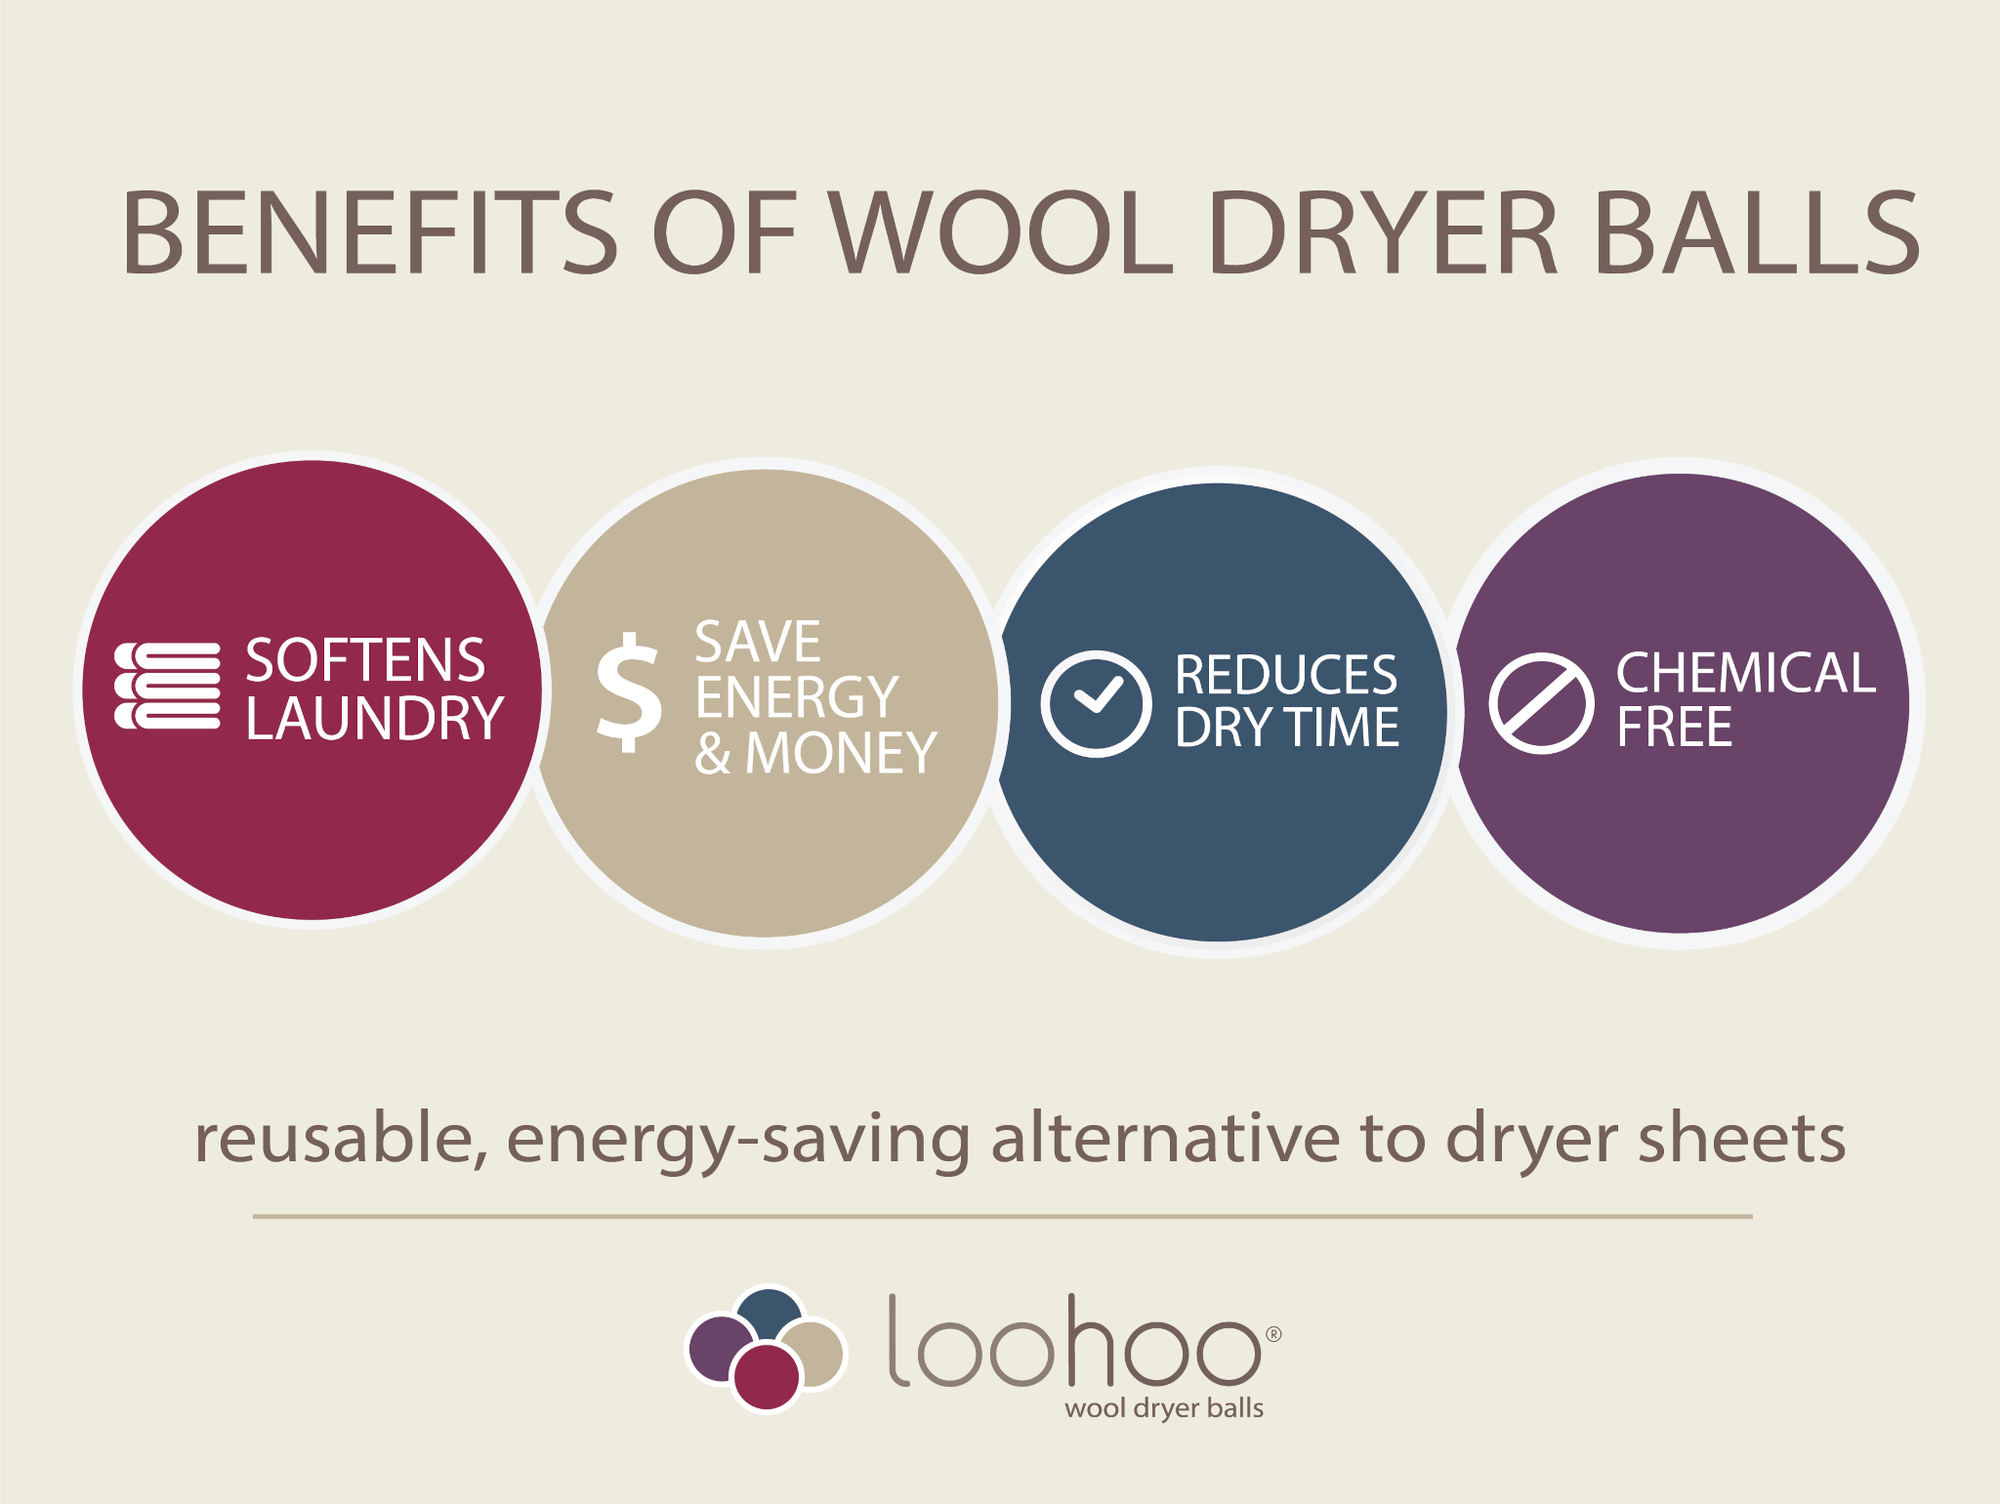 Grove Co. Wool Dryer Balls & Lavender Essential Oil Set